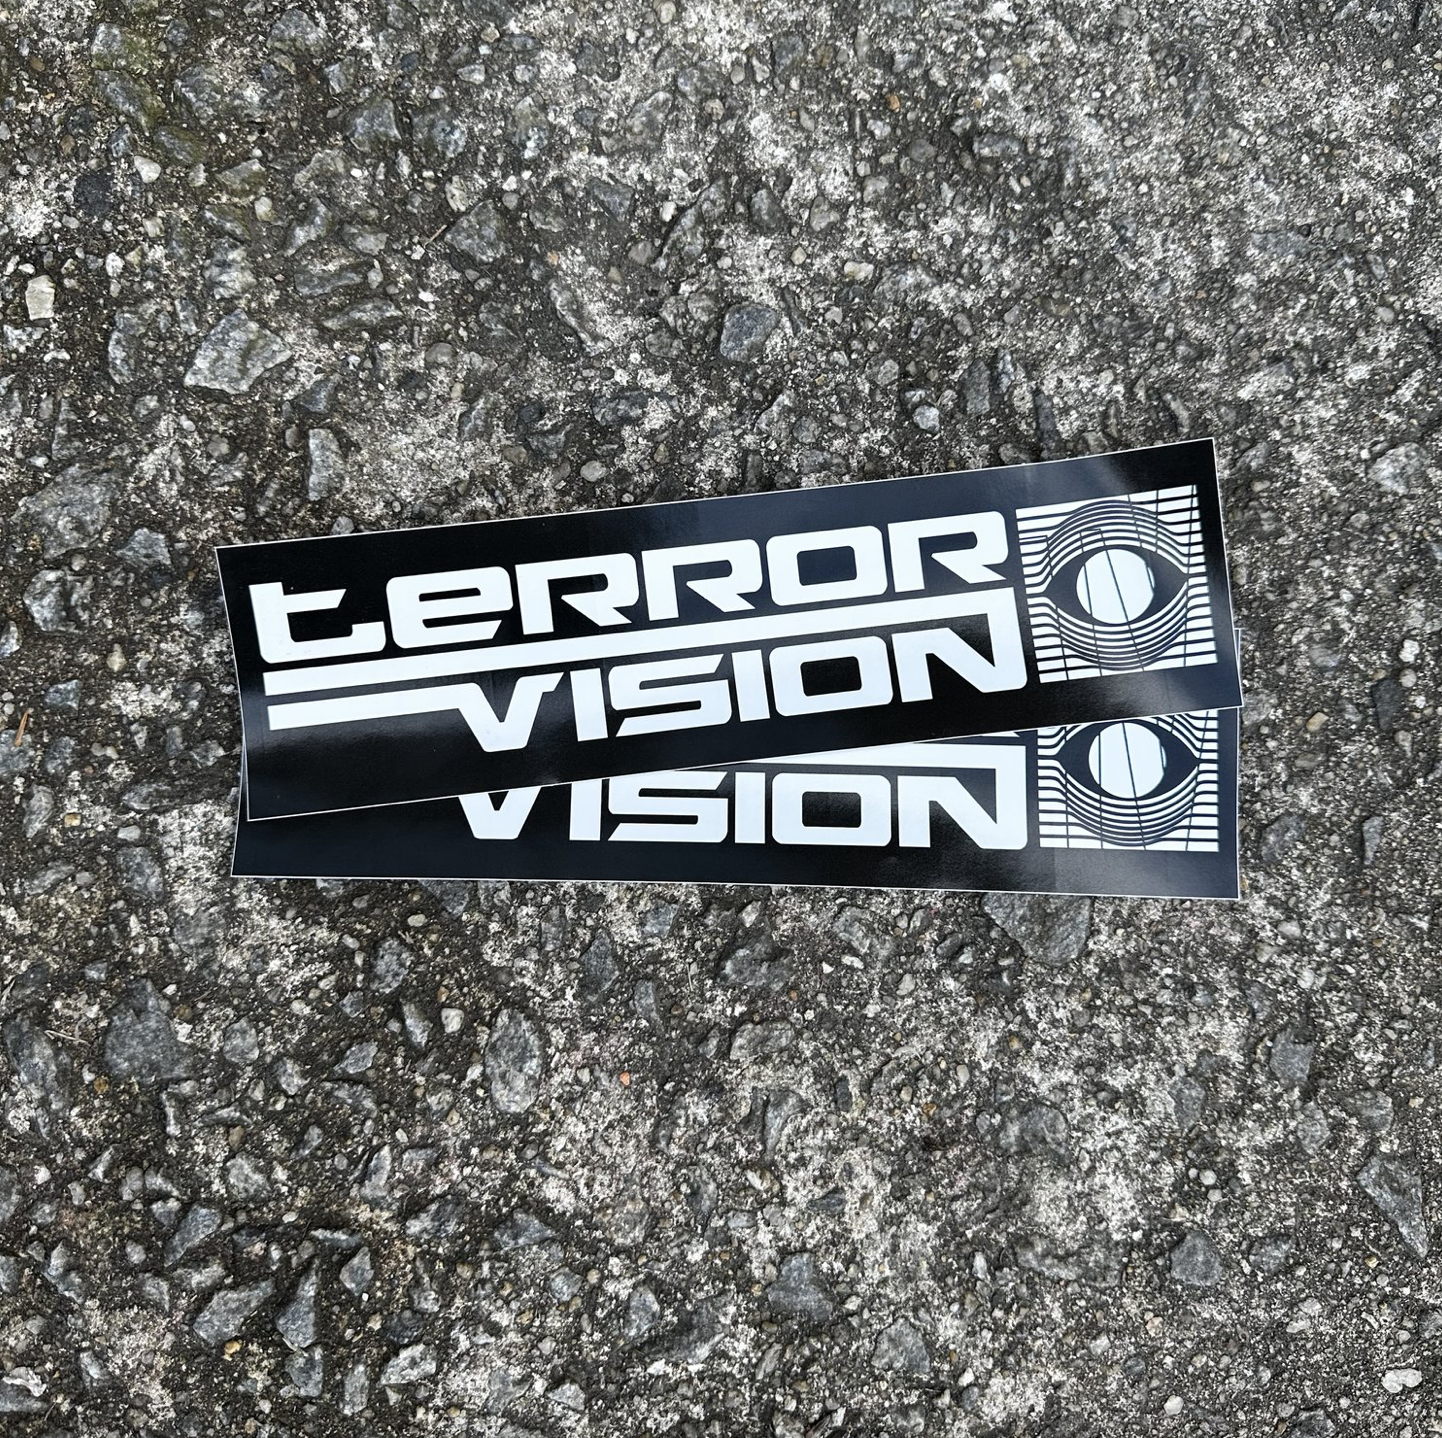 Terror Vision bumper sticker bundle of 3